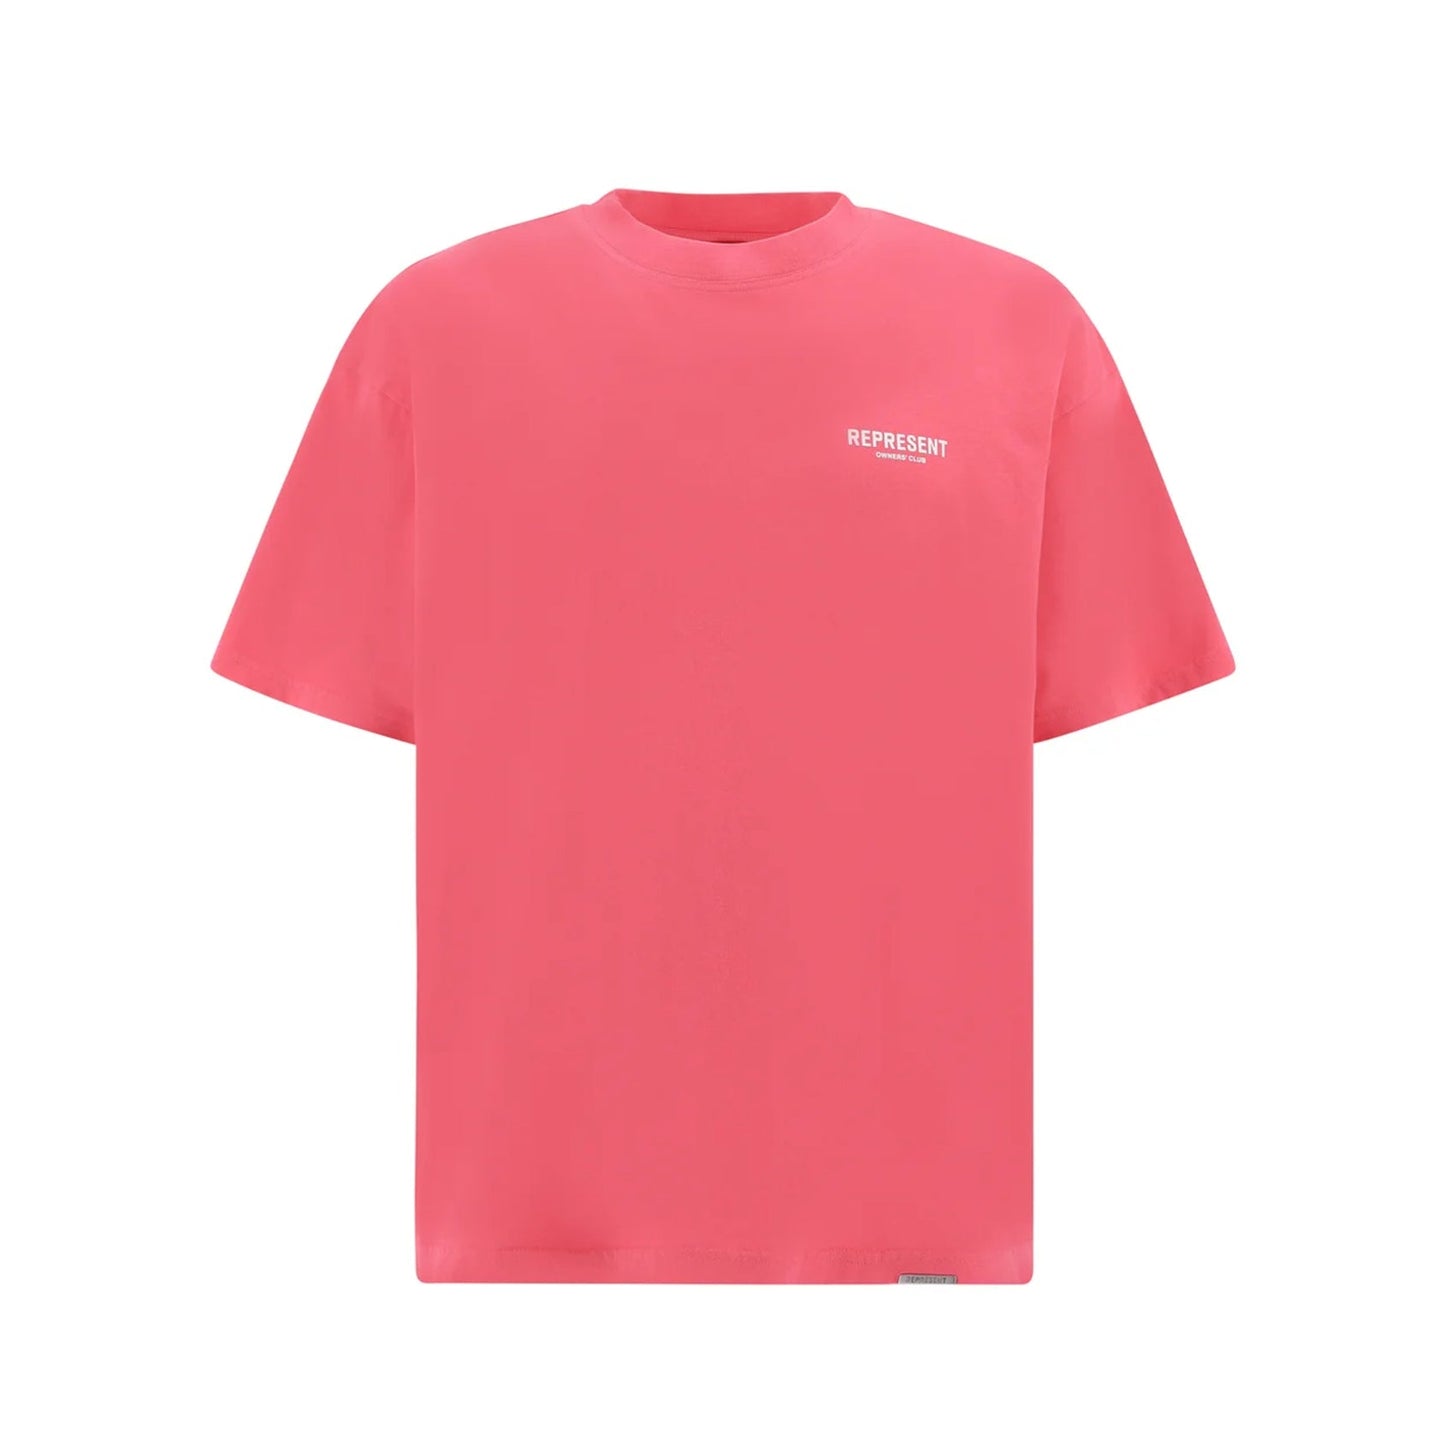 Represent Owners Club T-Shirt - 144 Bubblegum Pink - Escape Menswear